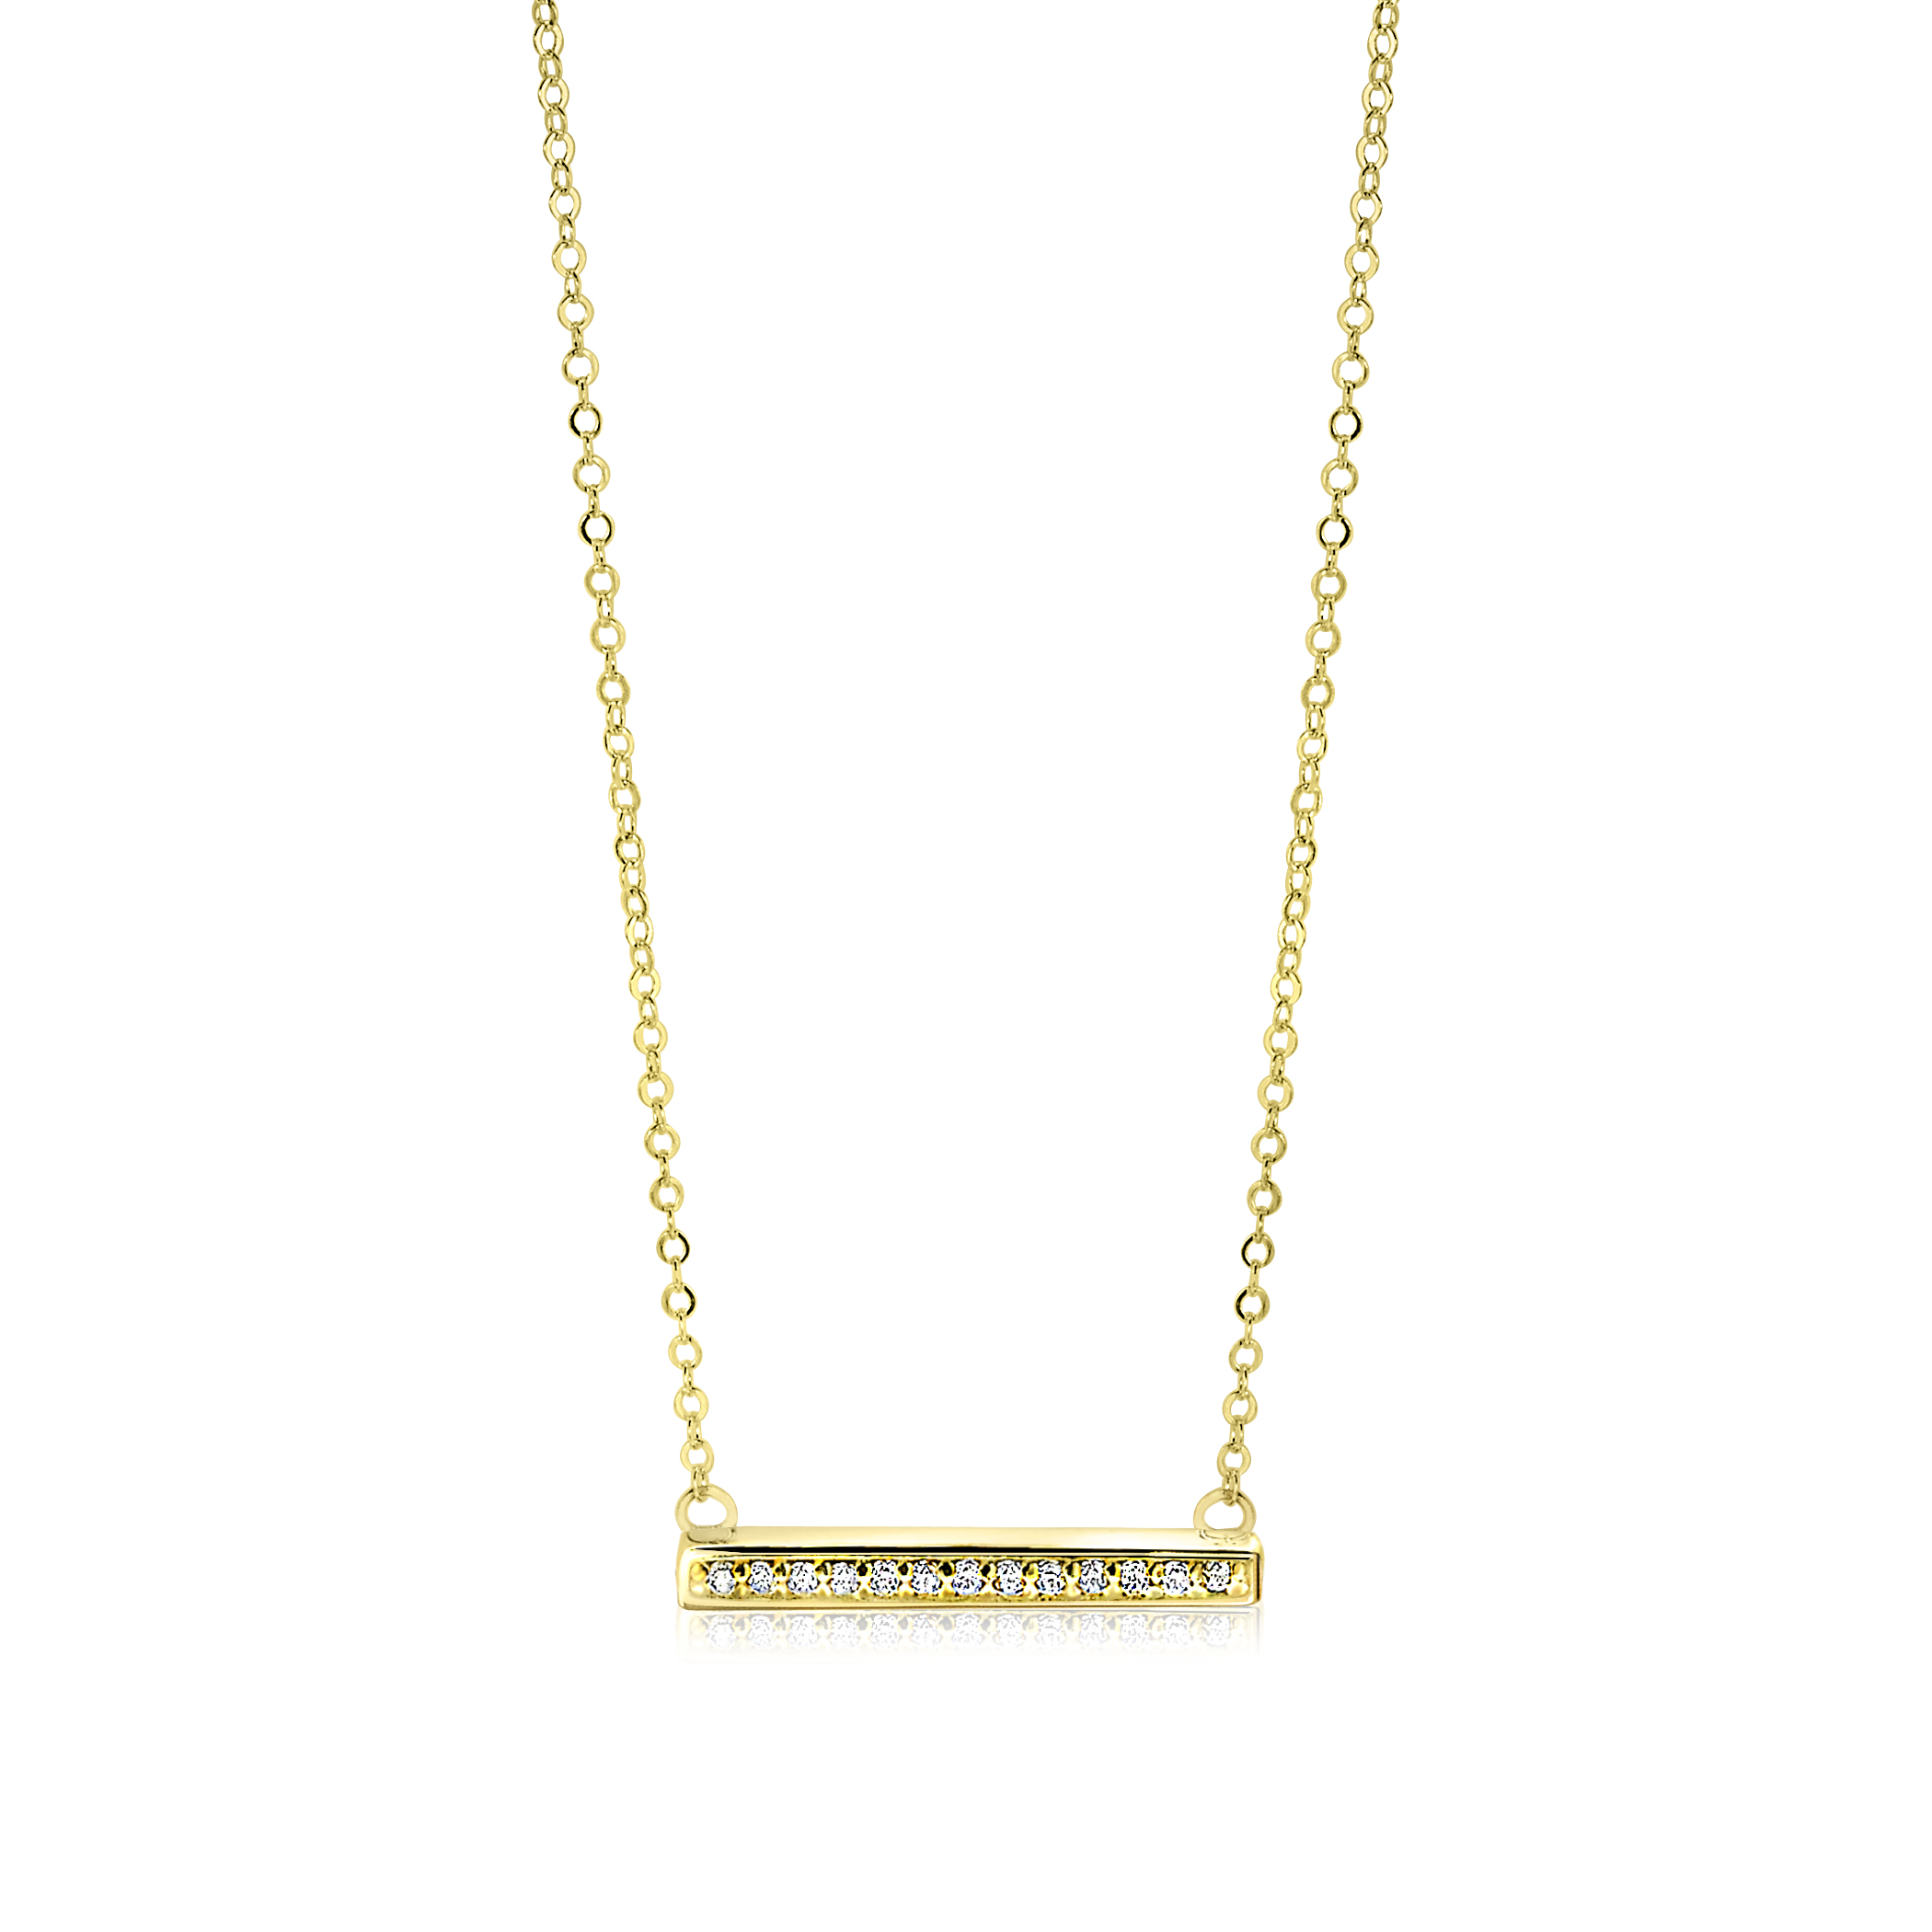 ZINZI 14K Gold Necklace Bar White Zirconia 45cm ZGC182